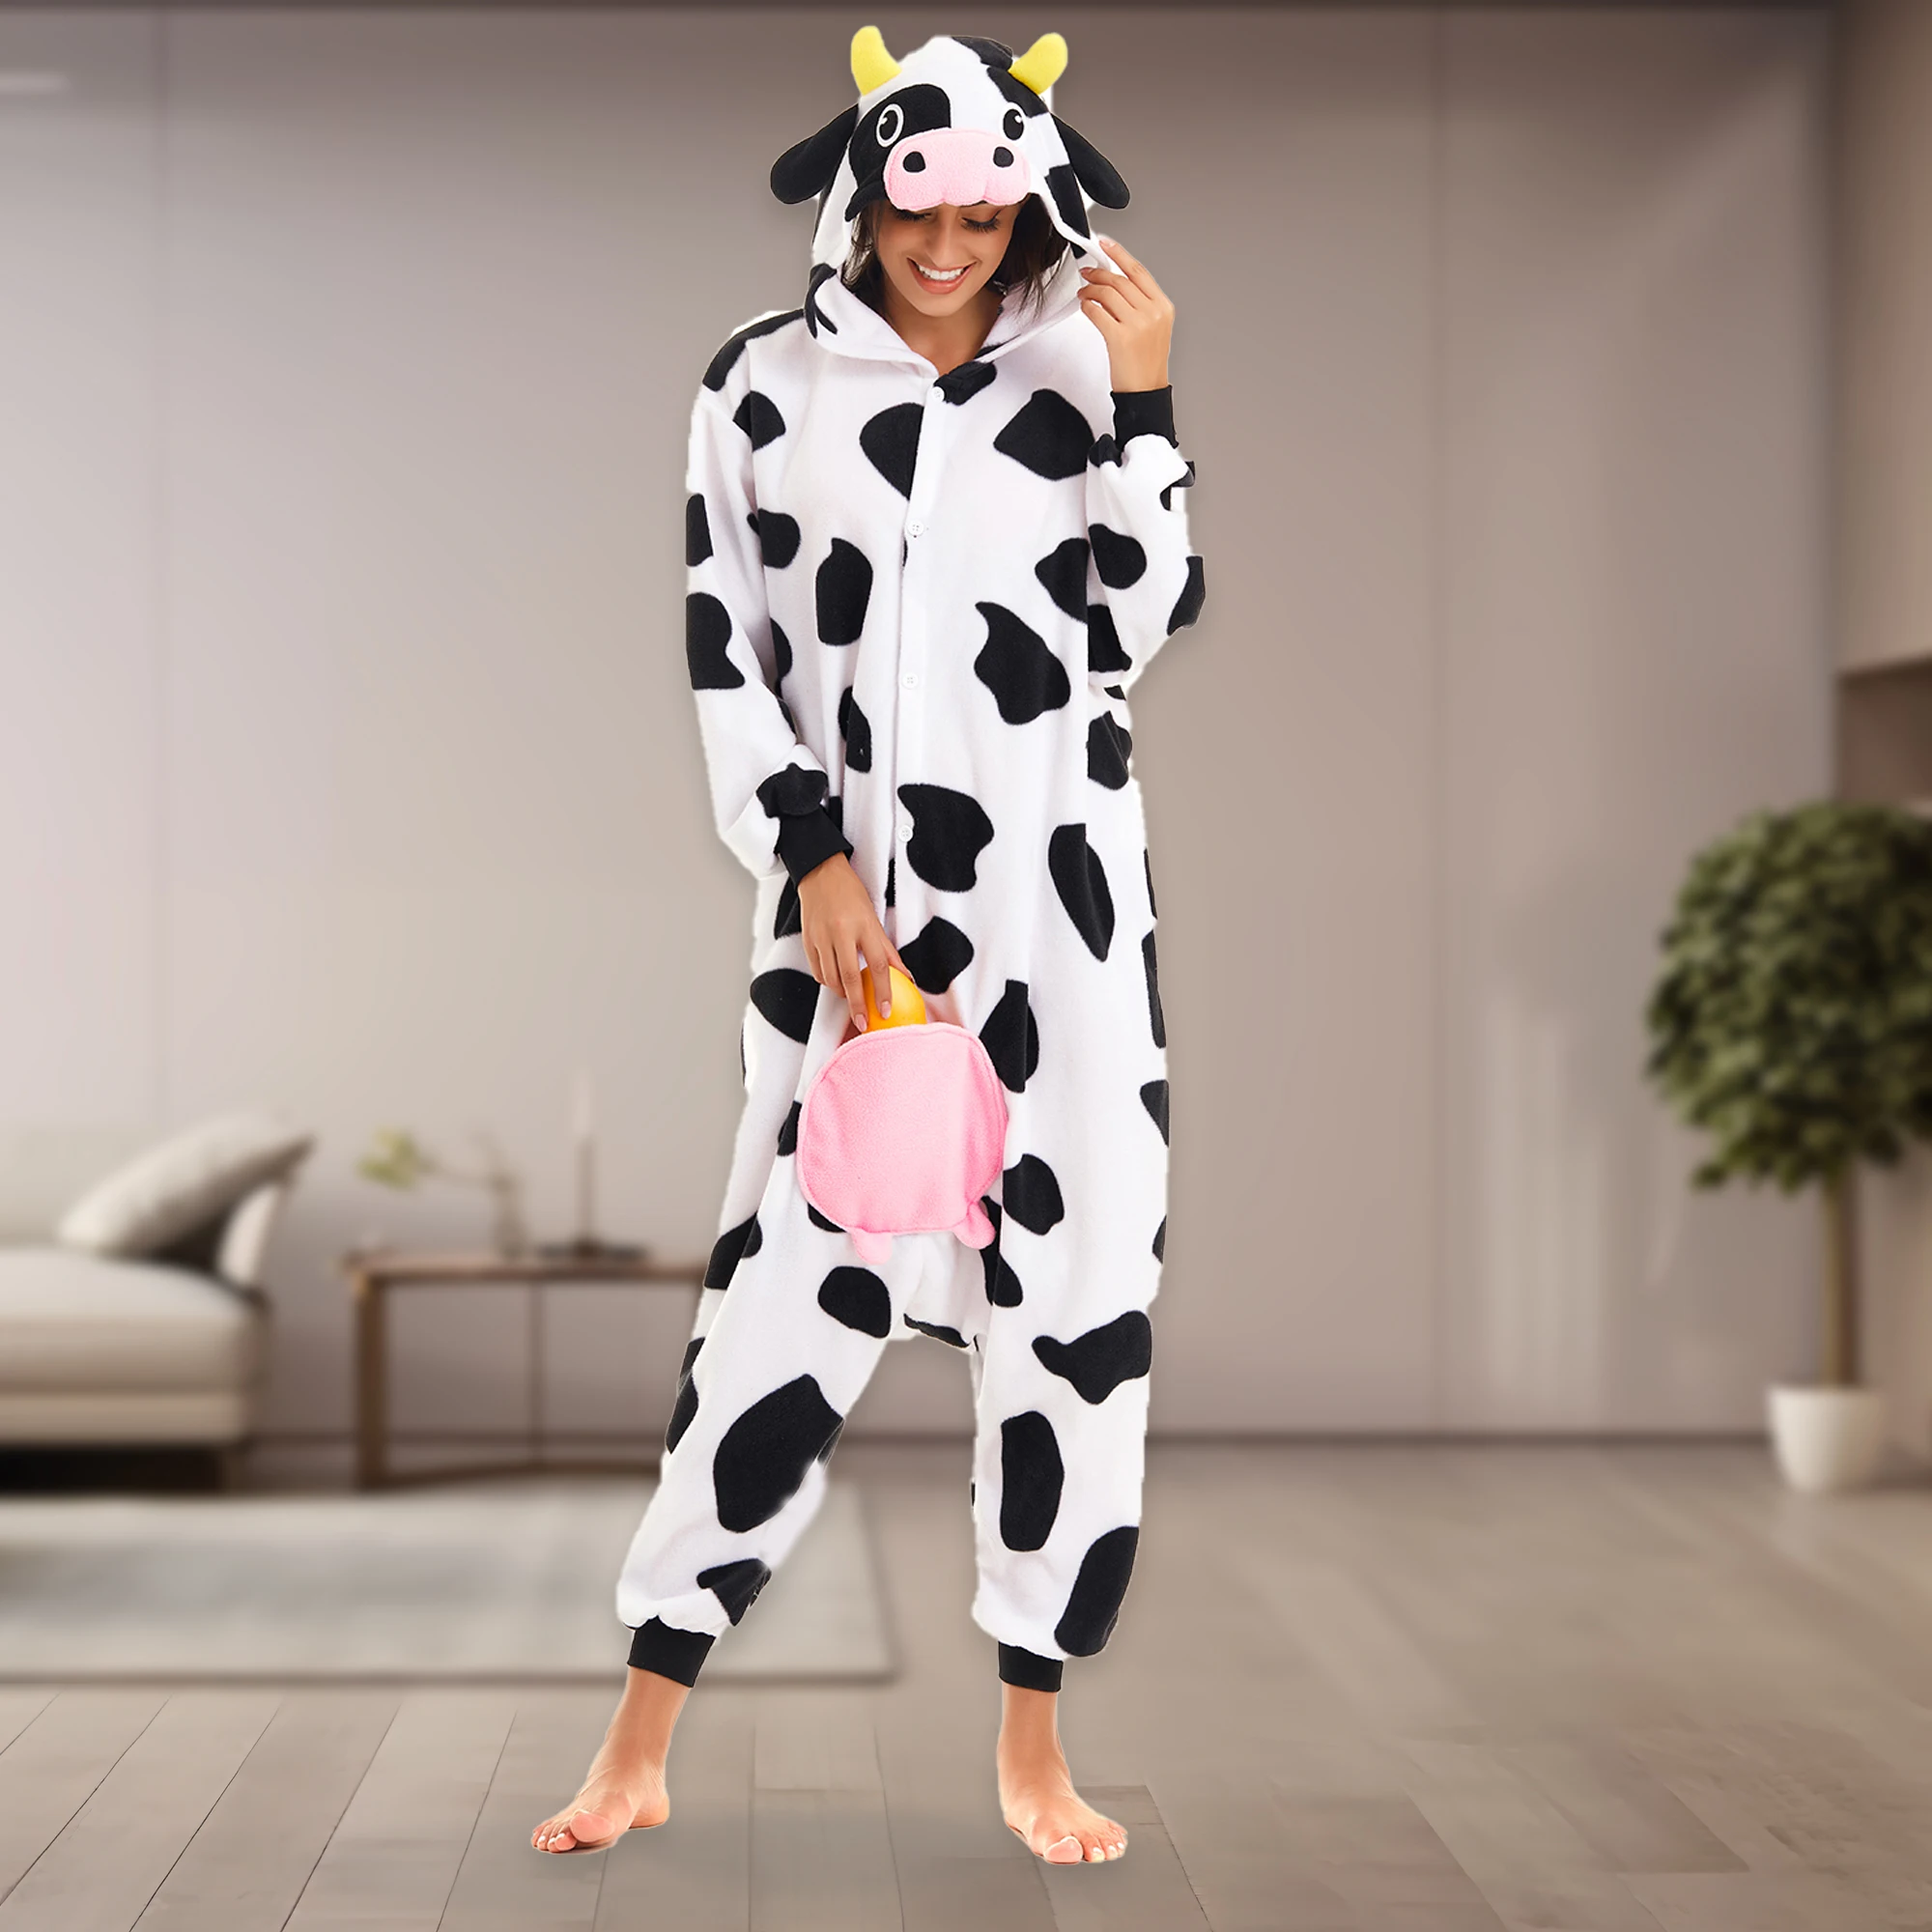 

CANASOUR Cow Onesie One-Piece Pajamas Adults Women Soft Hooded Pyjamas Halloween Christmas Cosplay Animal Costume Sleepwear